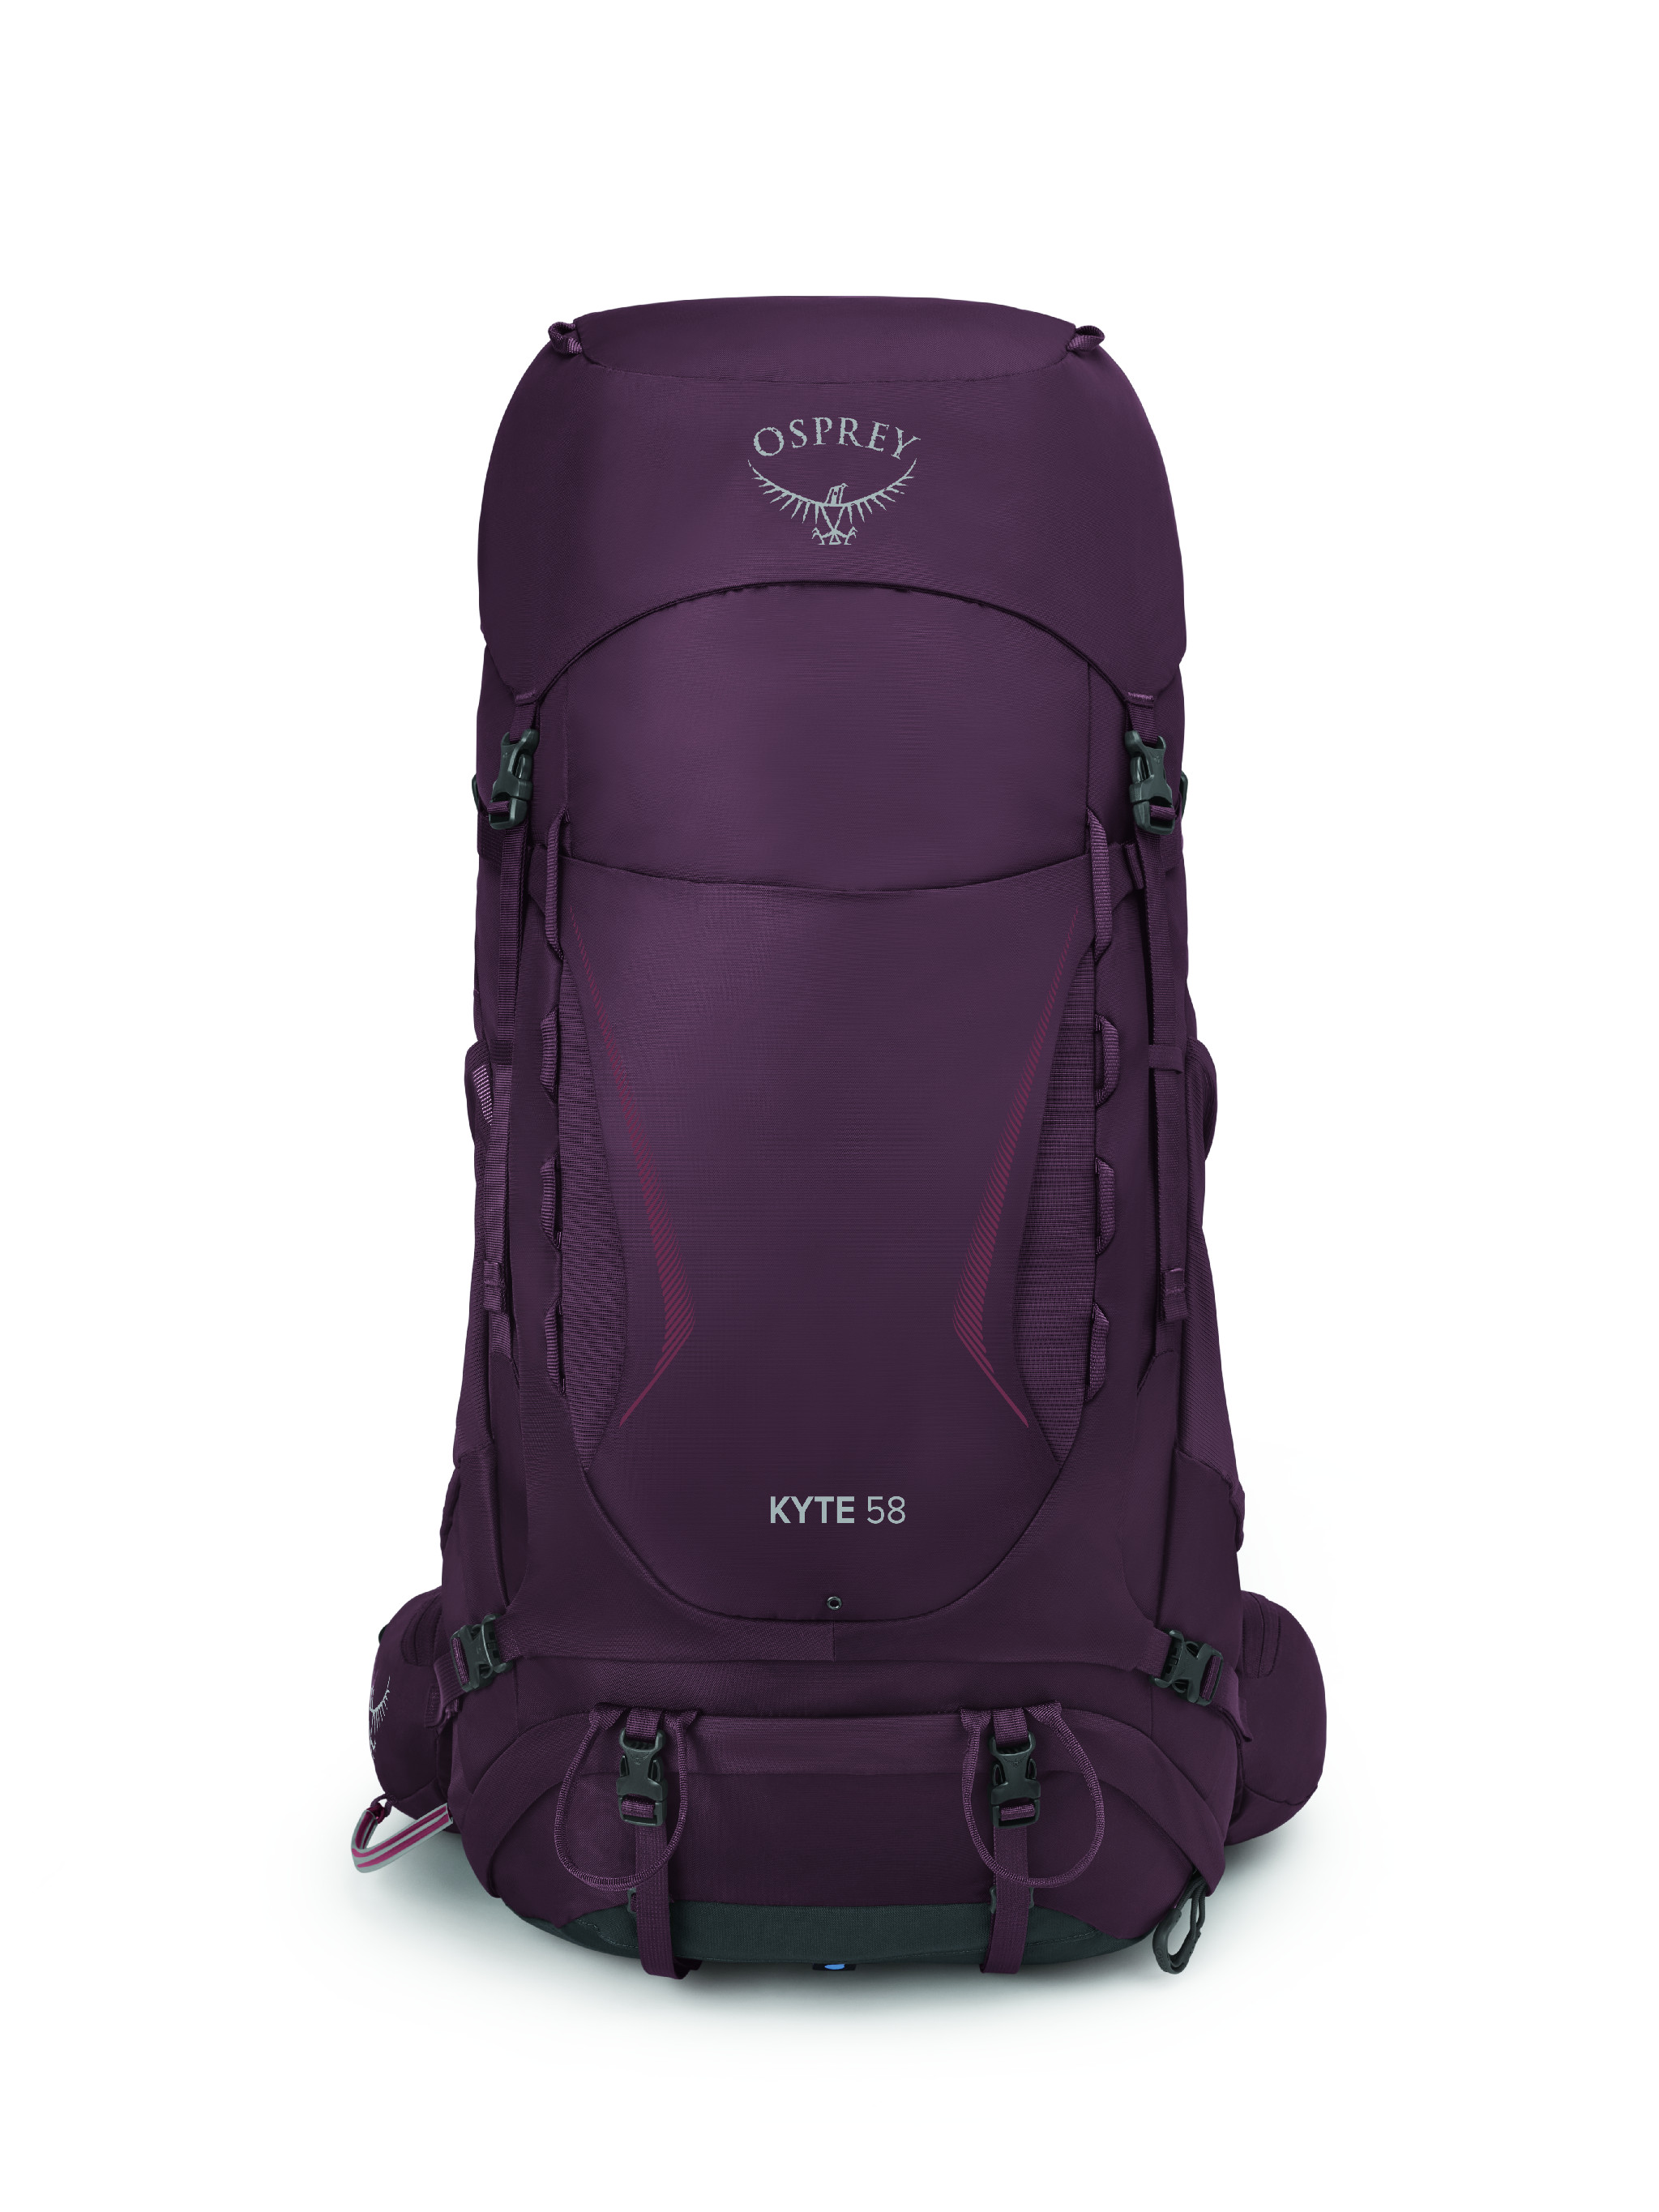 OSPREY KYTE 58 Barva: elderberry purple, Velikost: WXS/WS